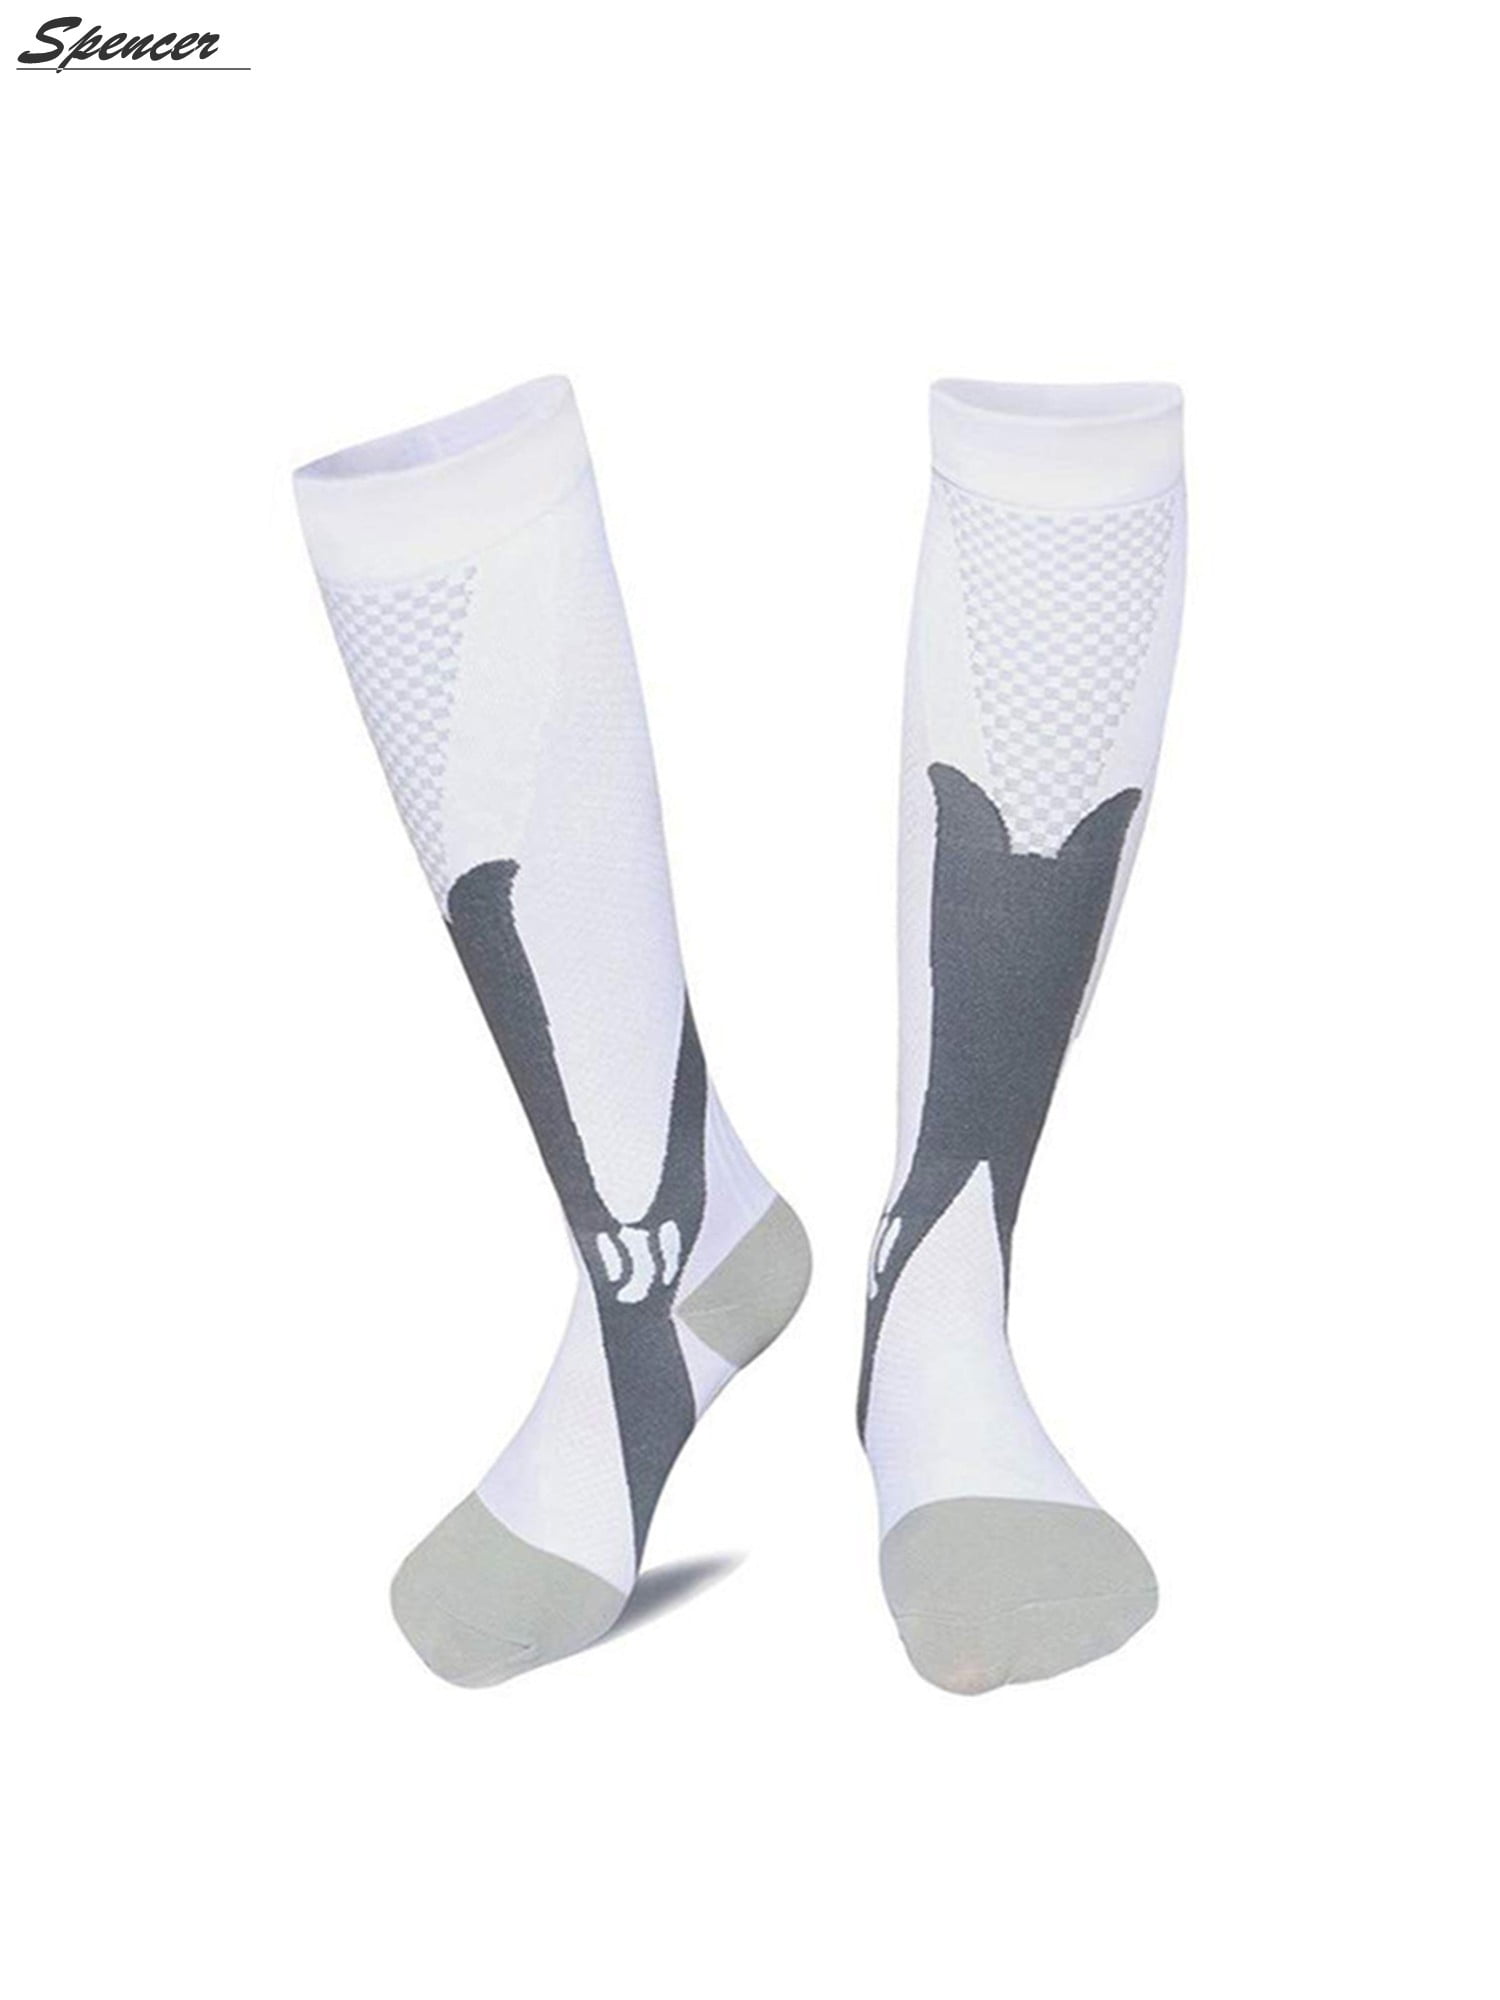 Compression Socks Pack of 2 For Women & Men Best For Running Travel XXL, Blue Pregnancy Nursing,Better Blood Circulation 20-30mmHg